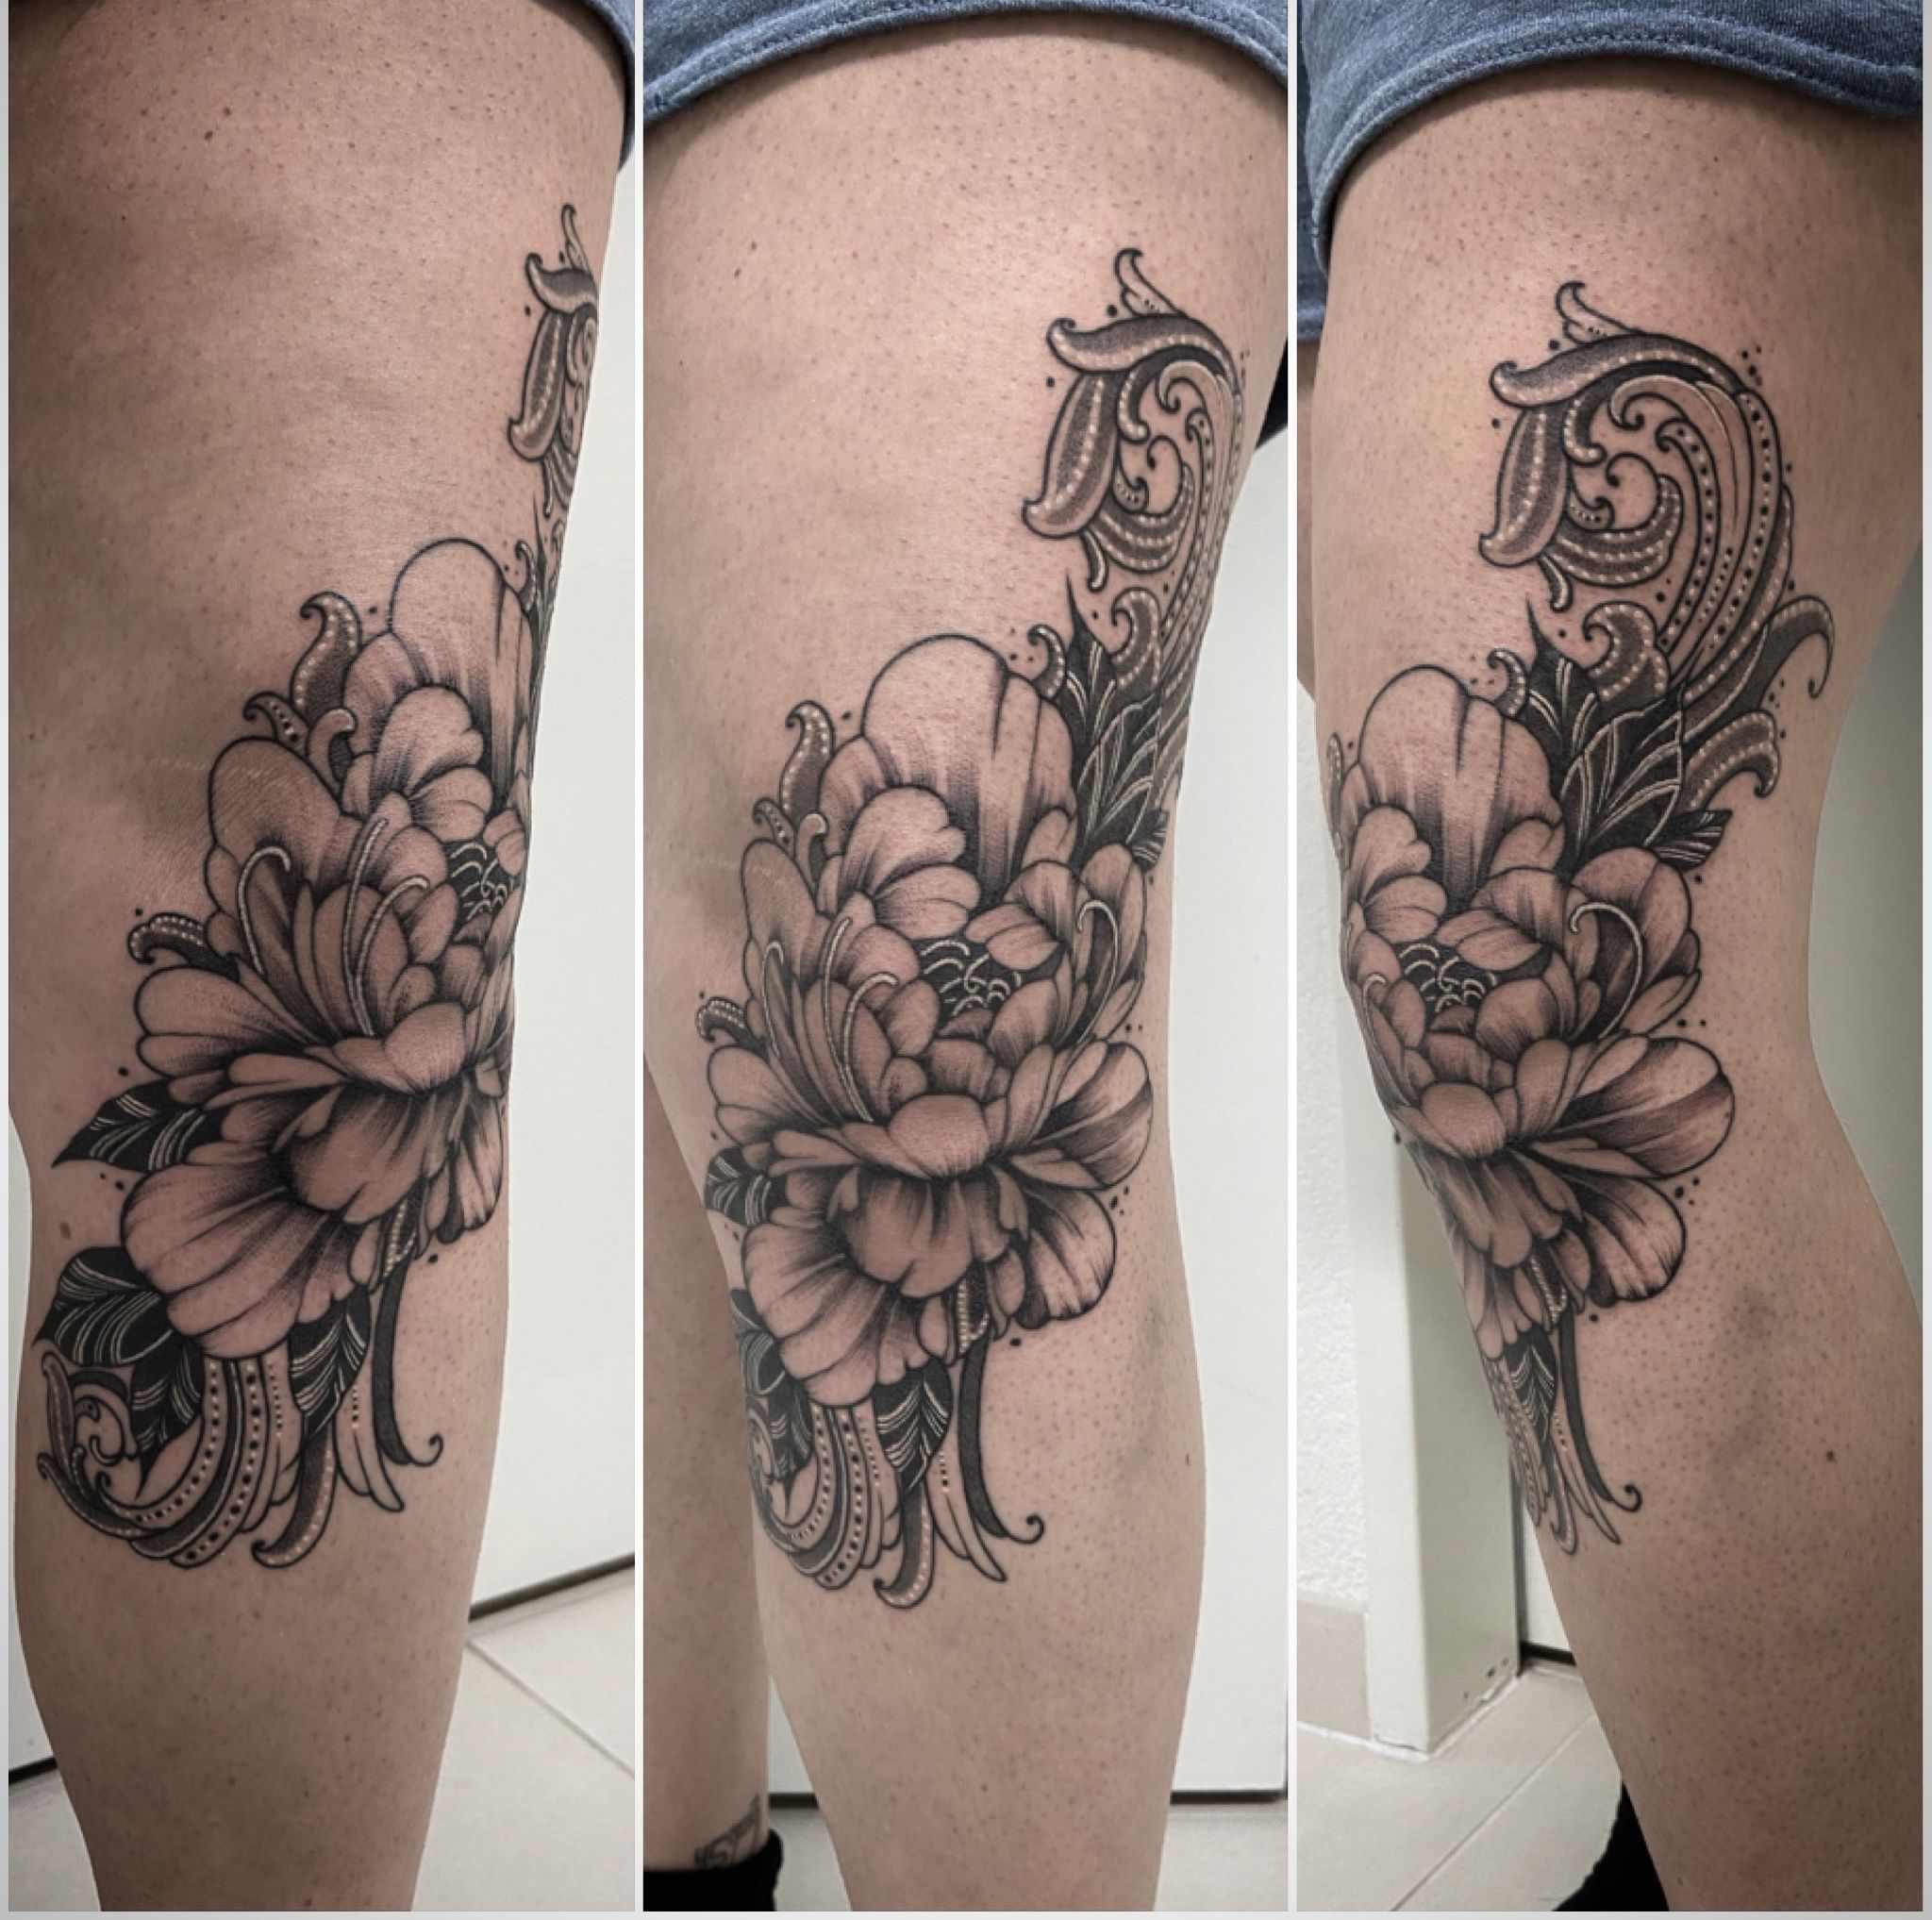 Tattoo tagged with centipede flower snake outline knee peony thigh  line blackw woman leg heart  inkedappcom